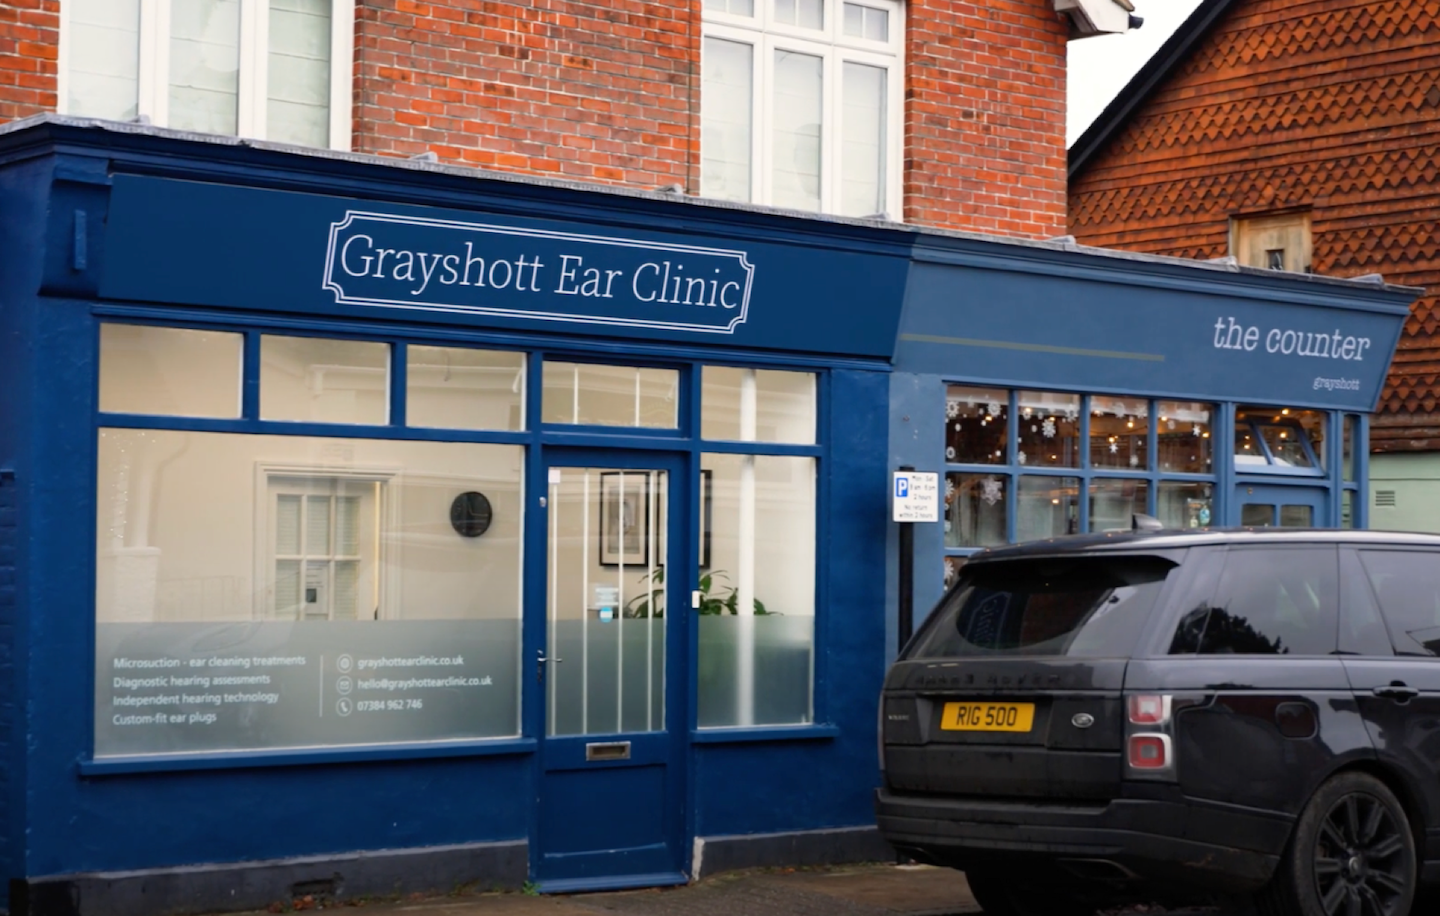 grayshott ear clinic from the outside